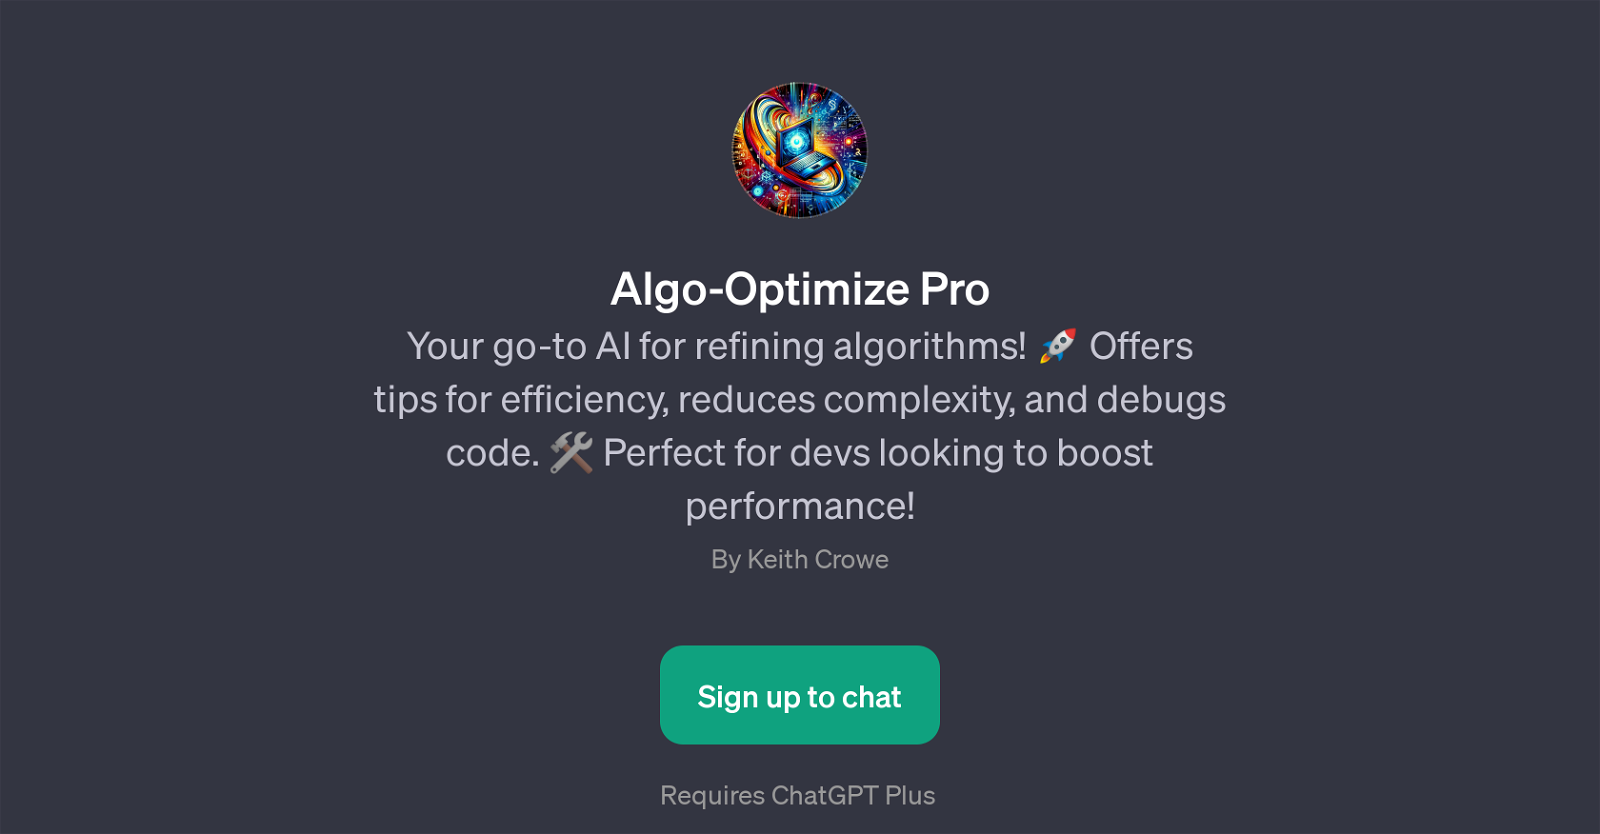 Algo-Optimize Pro website